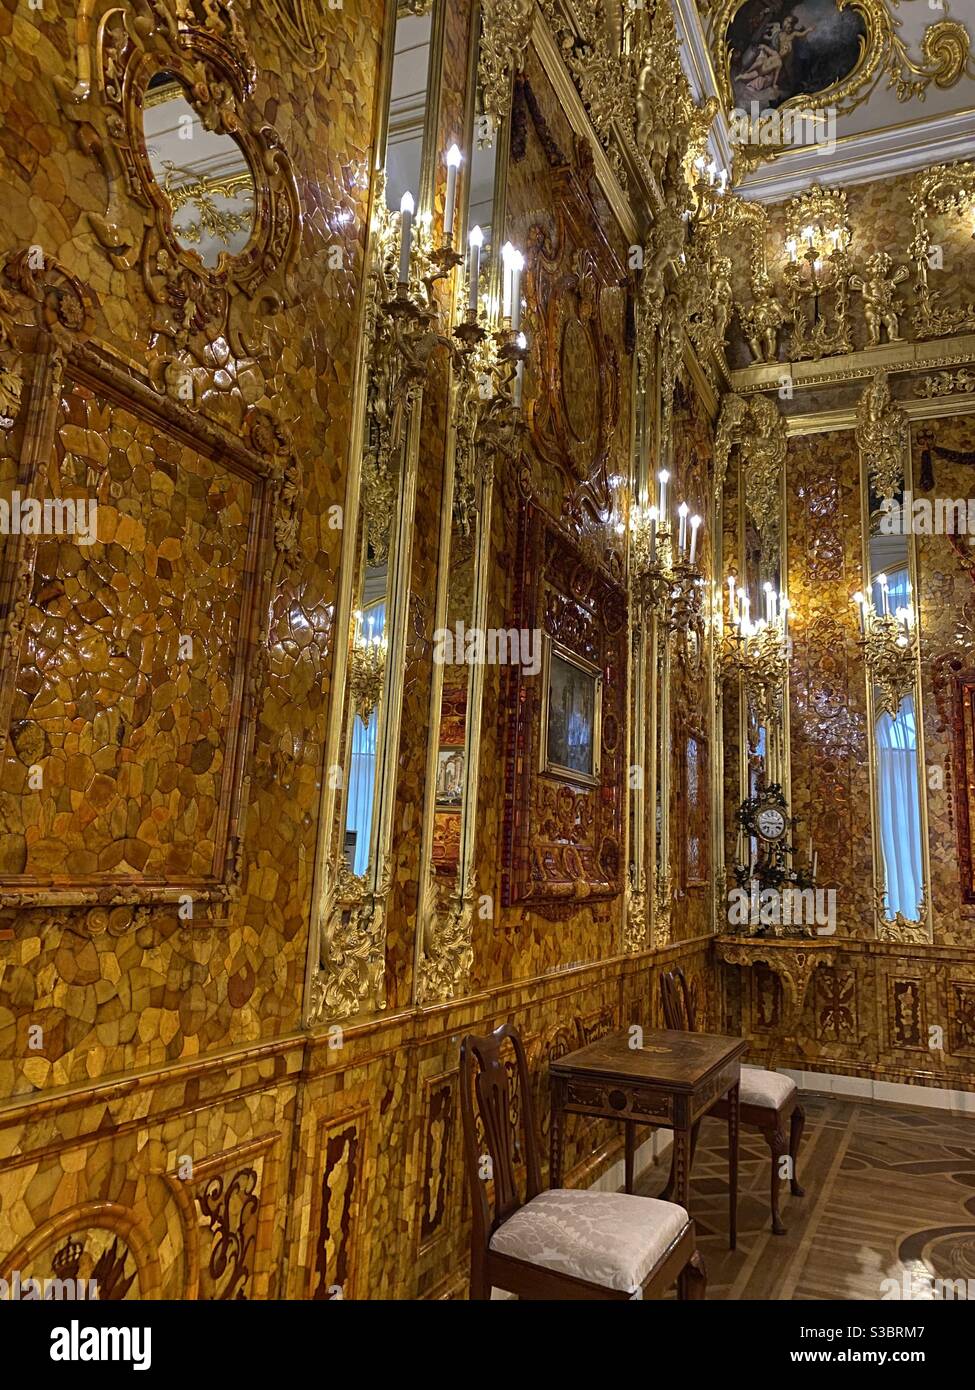 Amber room, Catherine Palace. Tsarskoe selo. Stock Photo